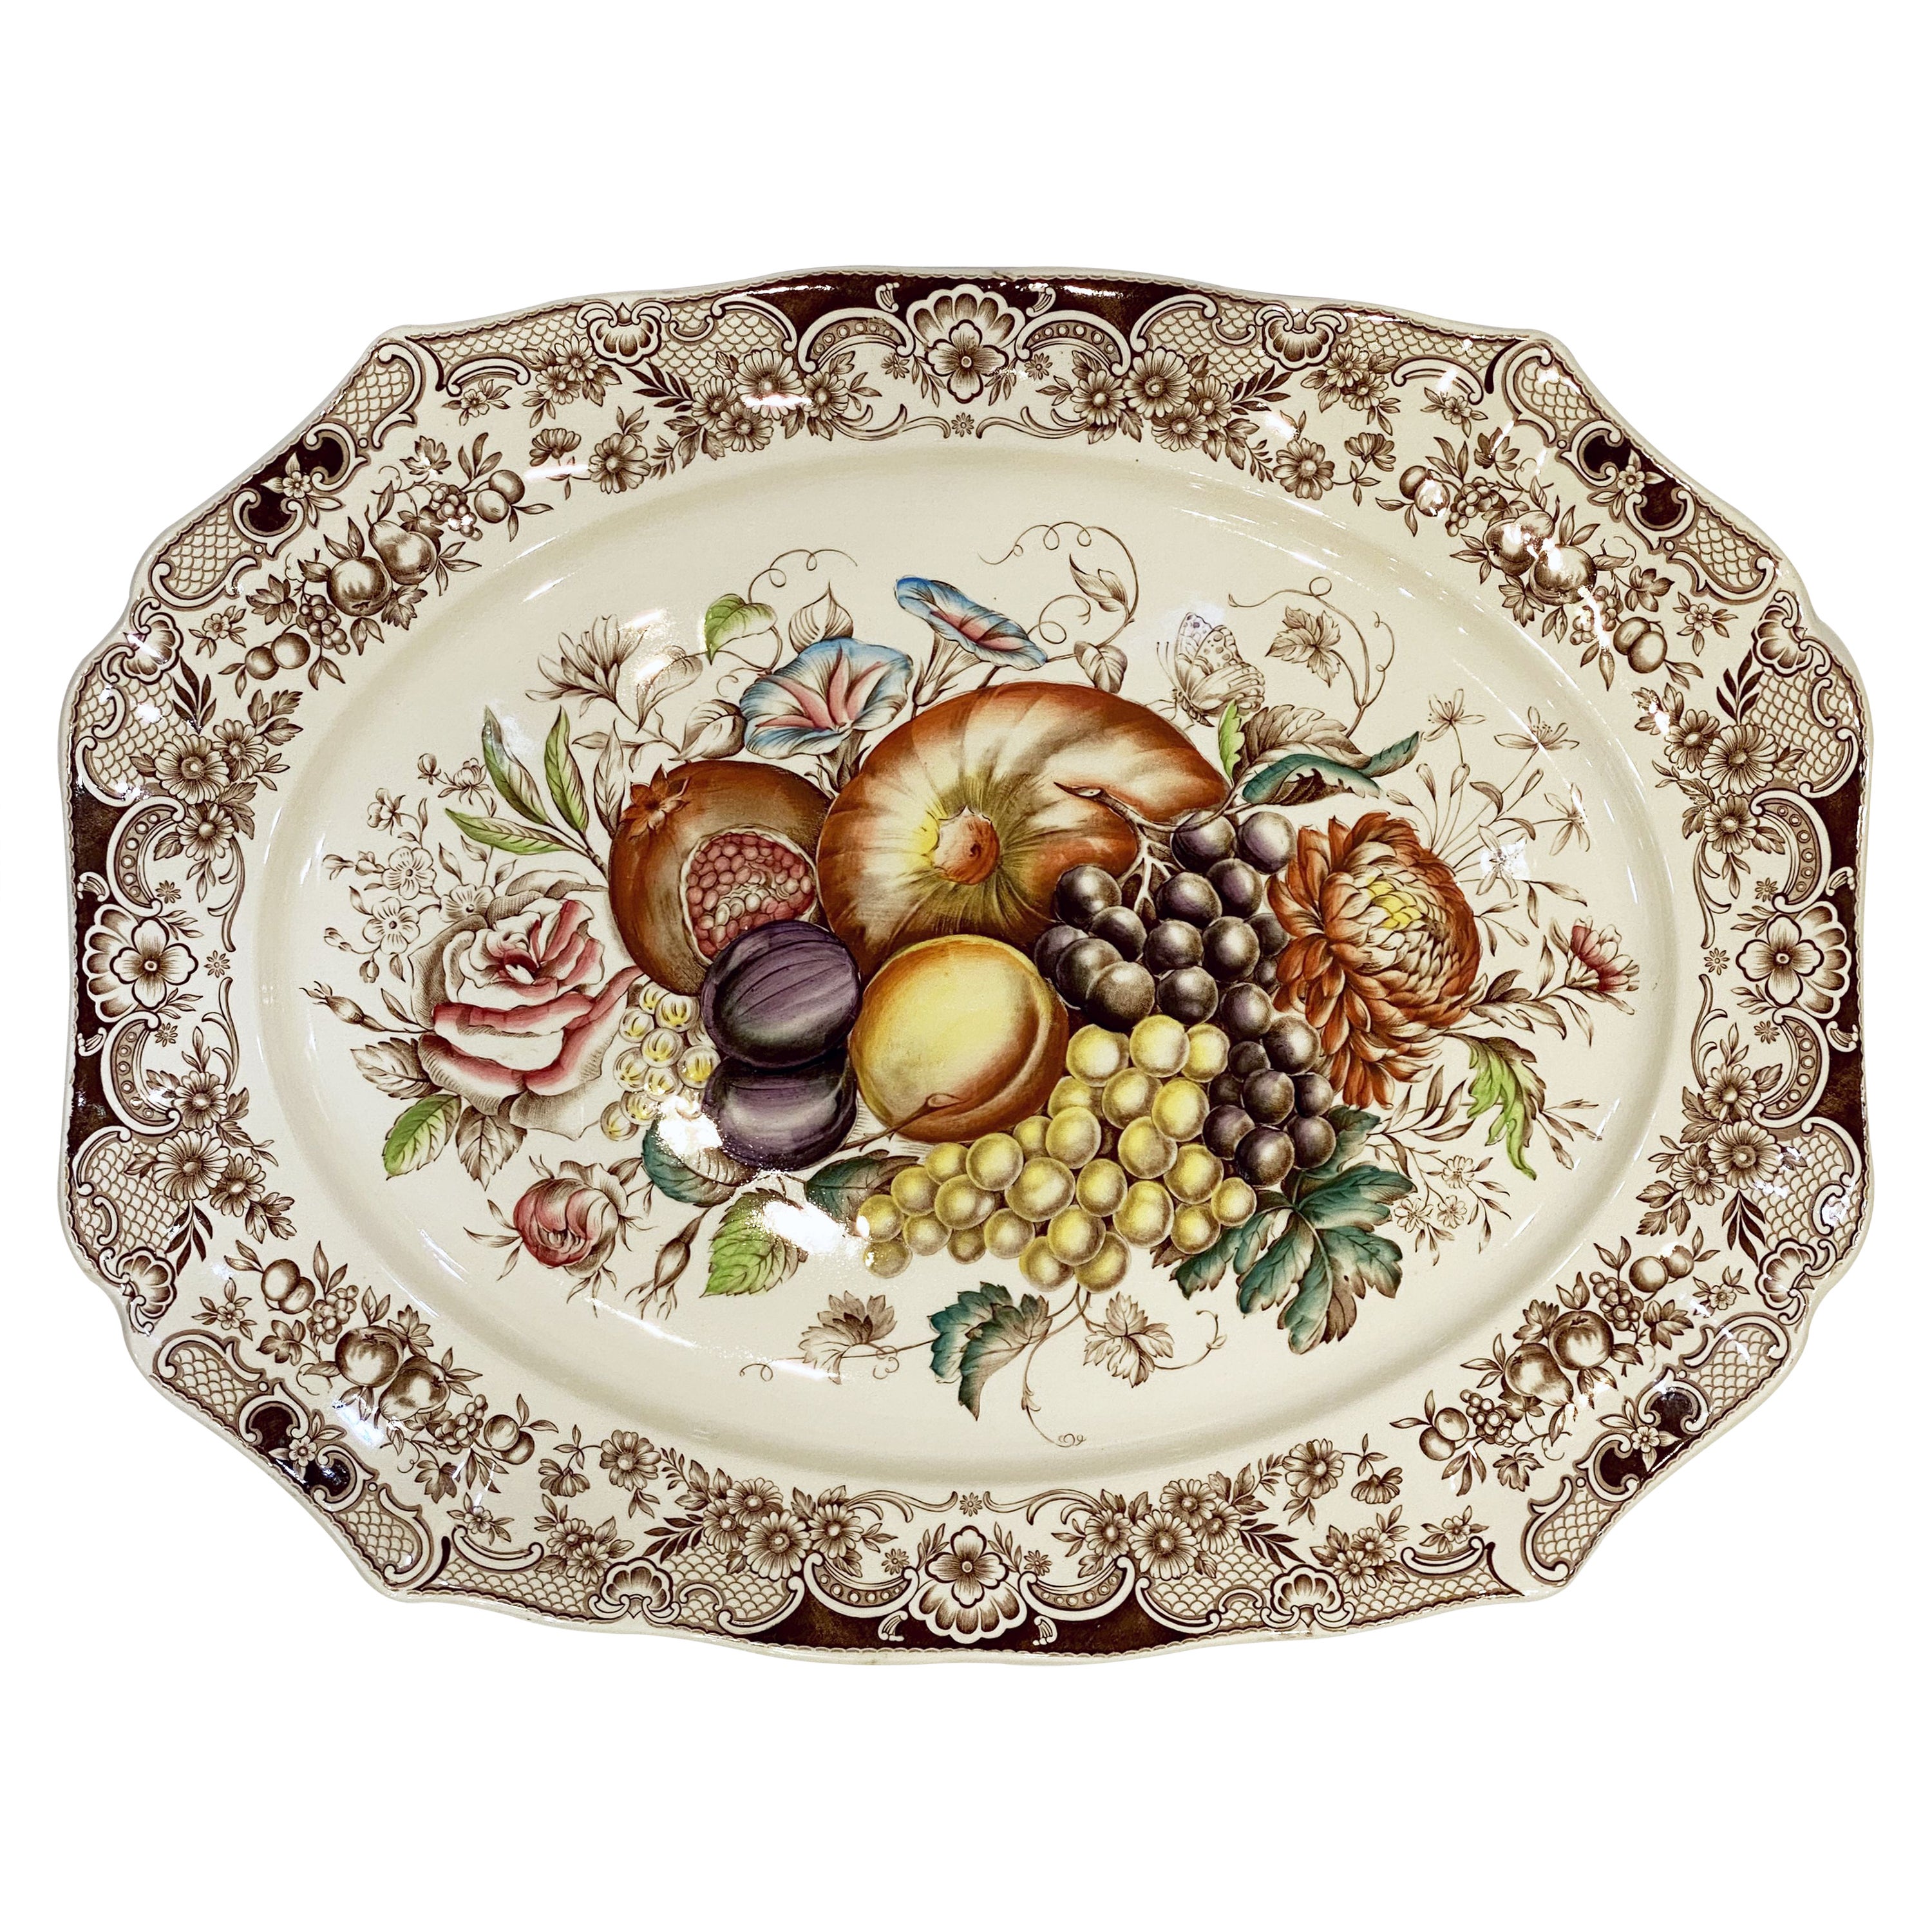 English Transferware Large Platter, Harvest Fruit Pattern by Johnson Brothers